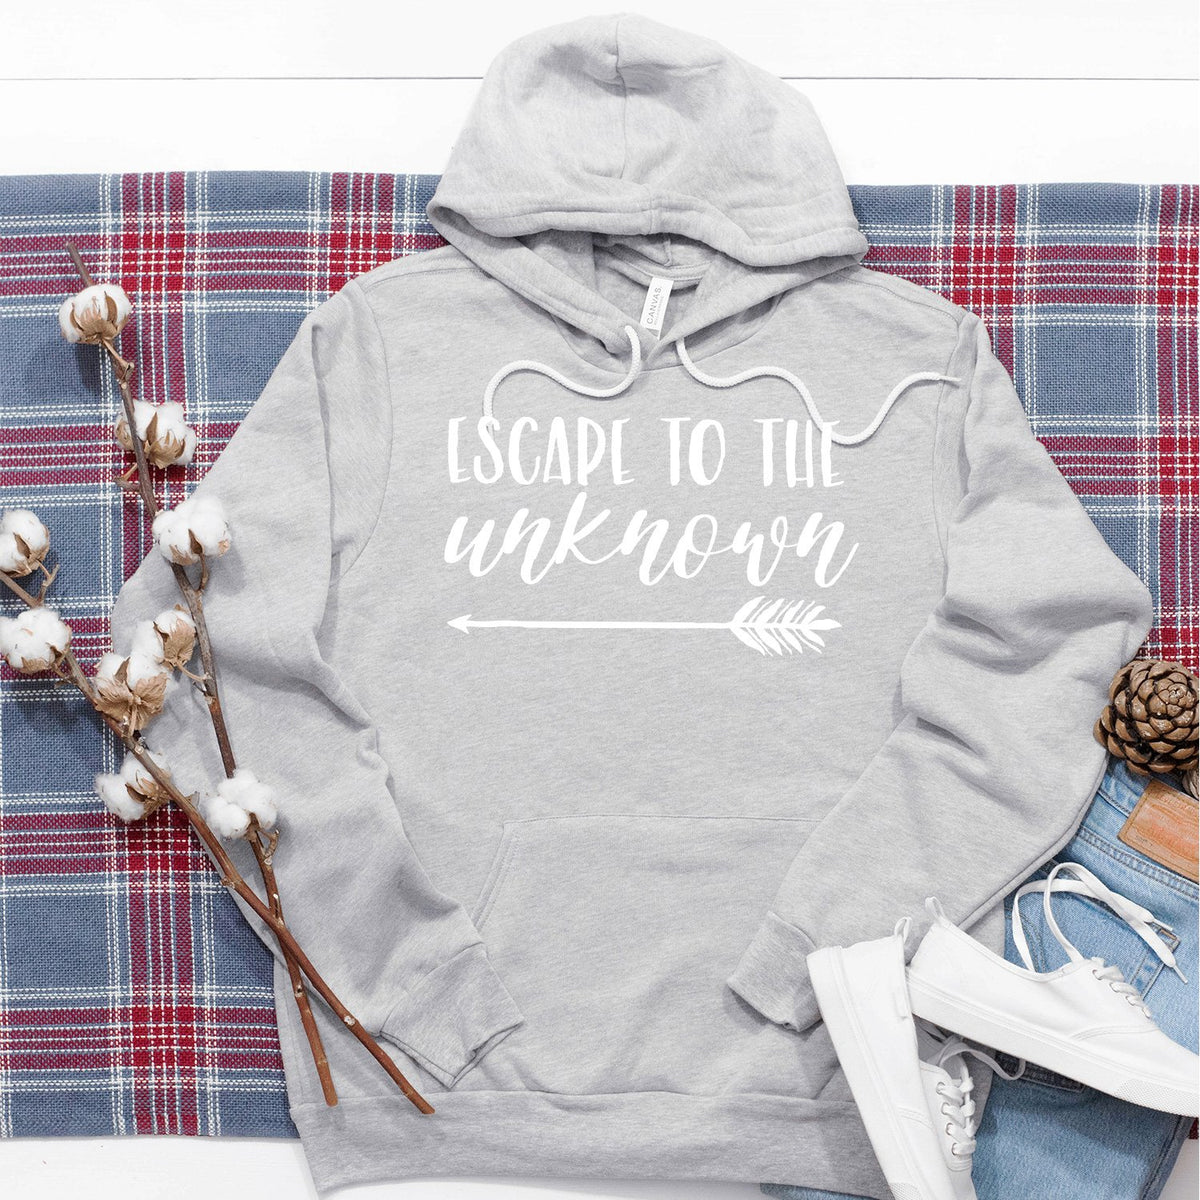 Escape to The Unknown - Hoodie Sweatshirt